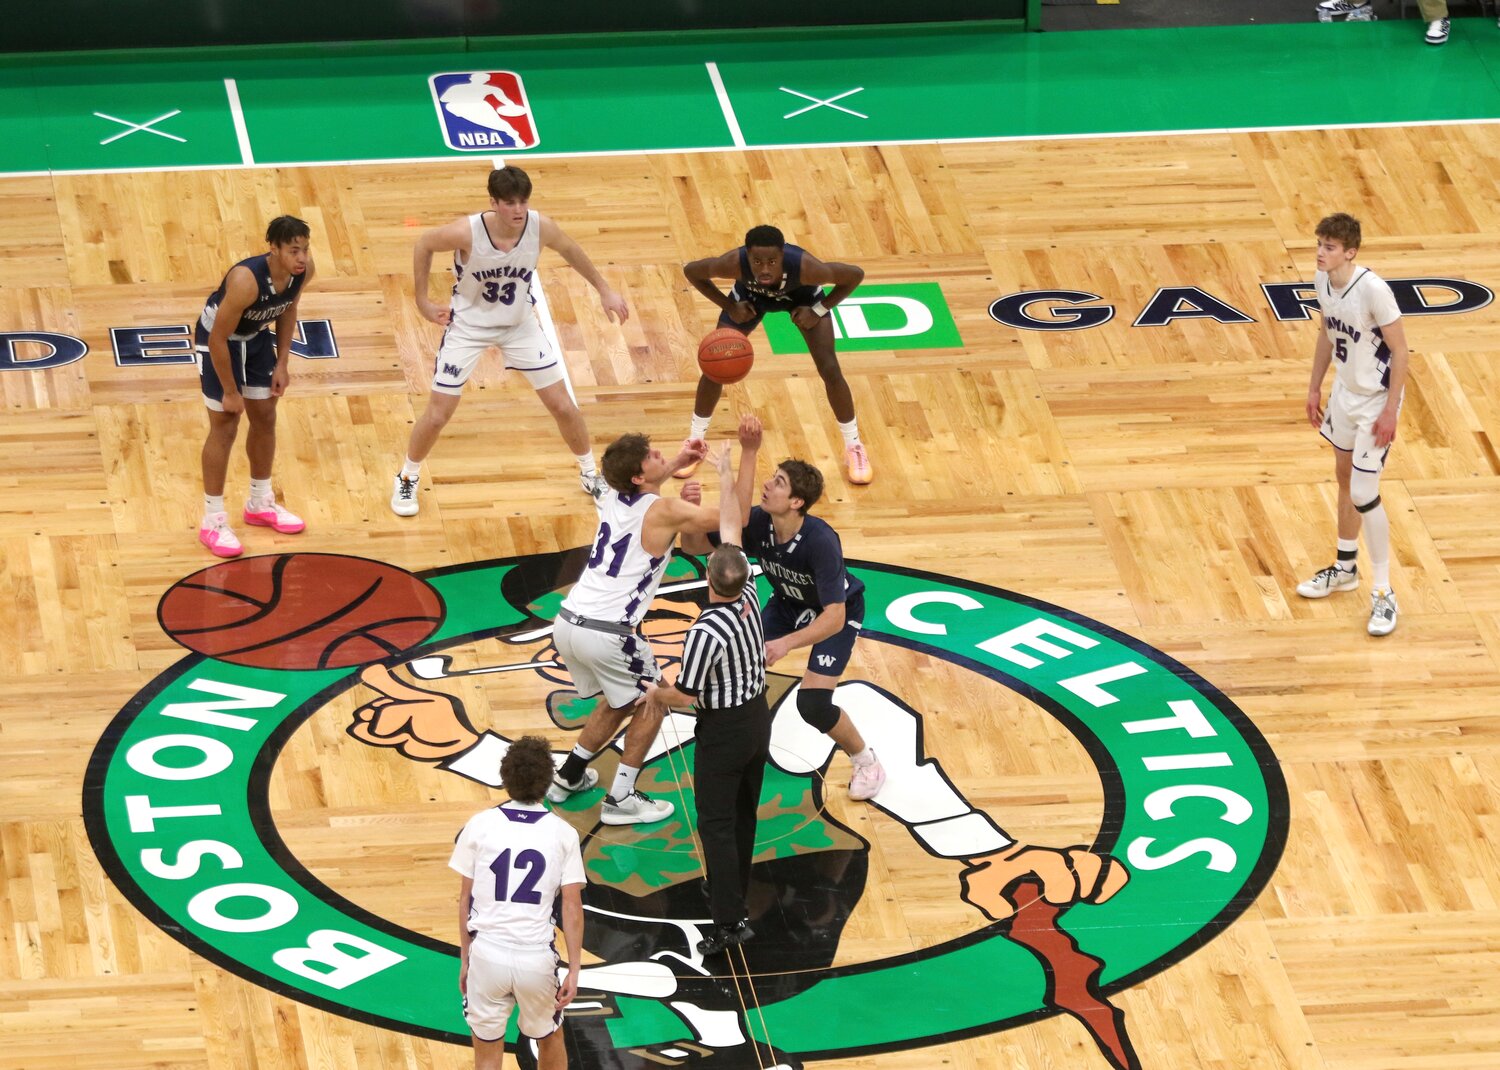 Boys basketball beat Martha's Vineyard 67-58 Sunday at TD Garden in Boston.